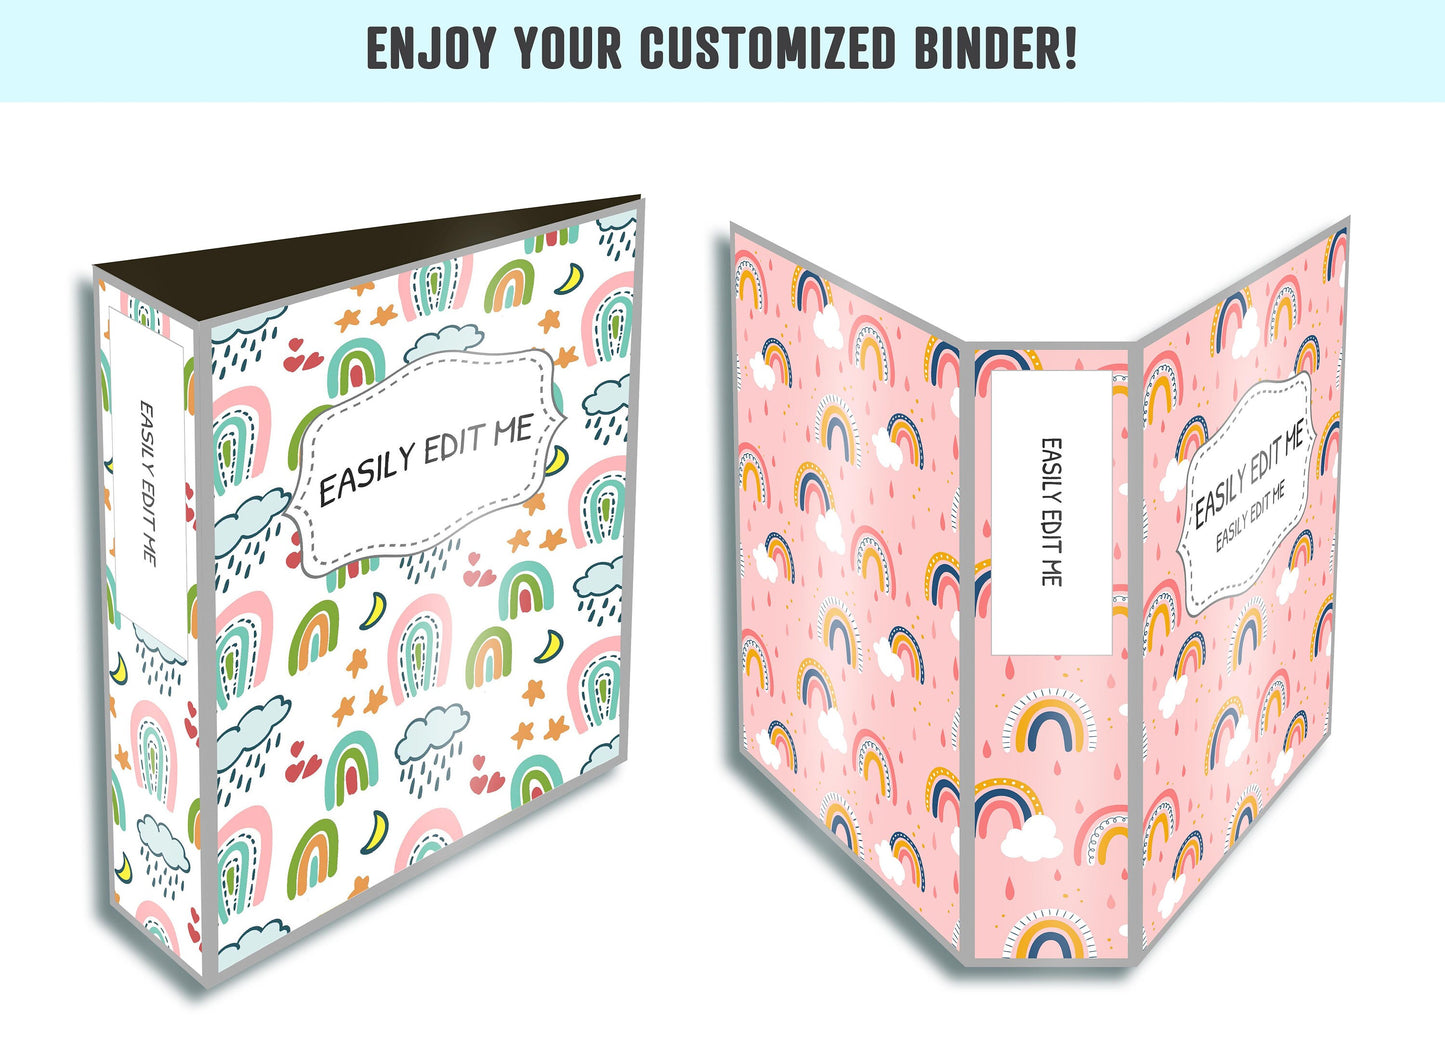 Rainbow Binder Cover, 10 Printable & Editable Binder Covers+Spines, Binder Inserts, Planner Cover, Teacher/School Binder Cover, Folder Cover